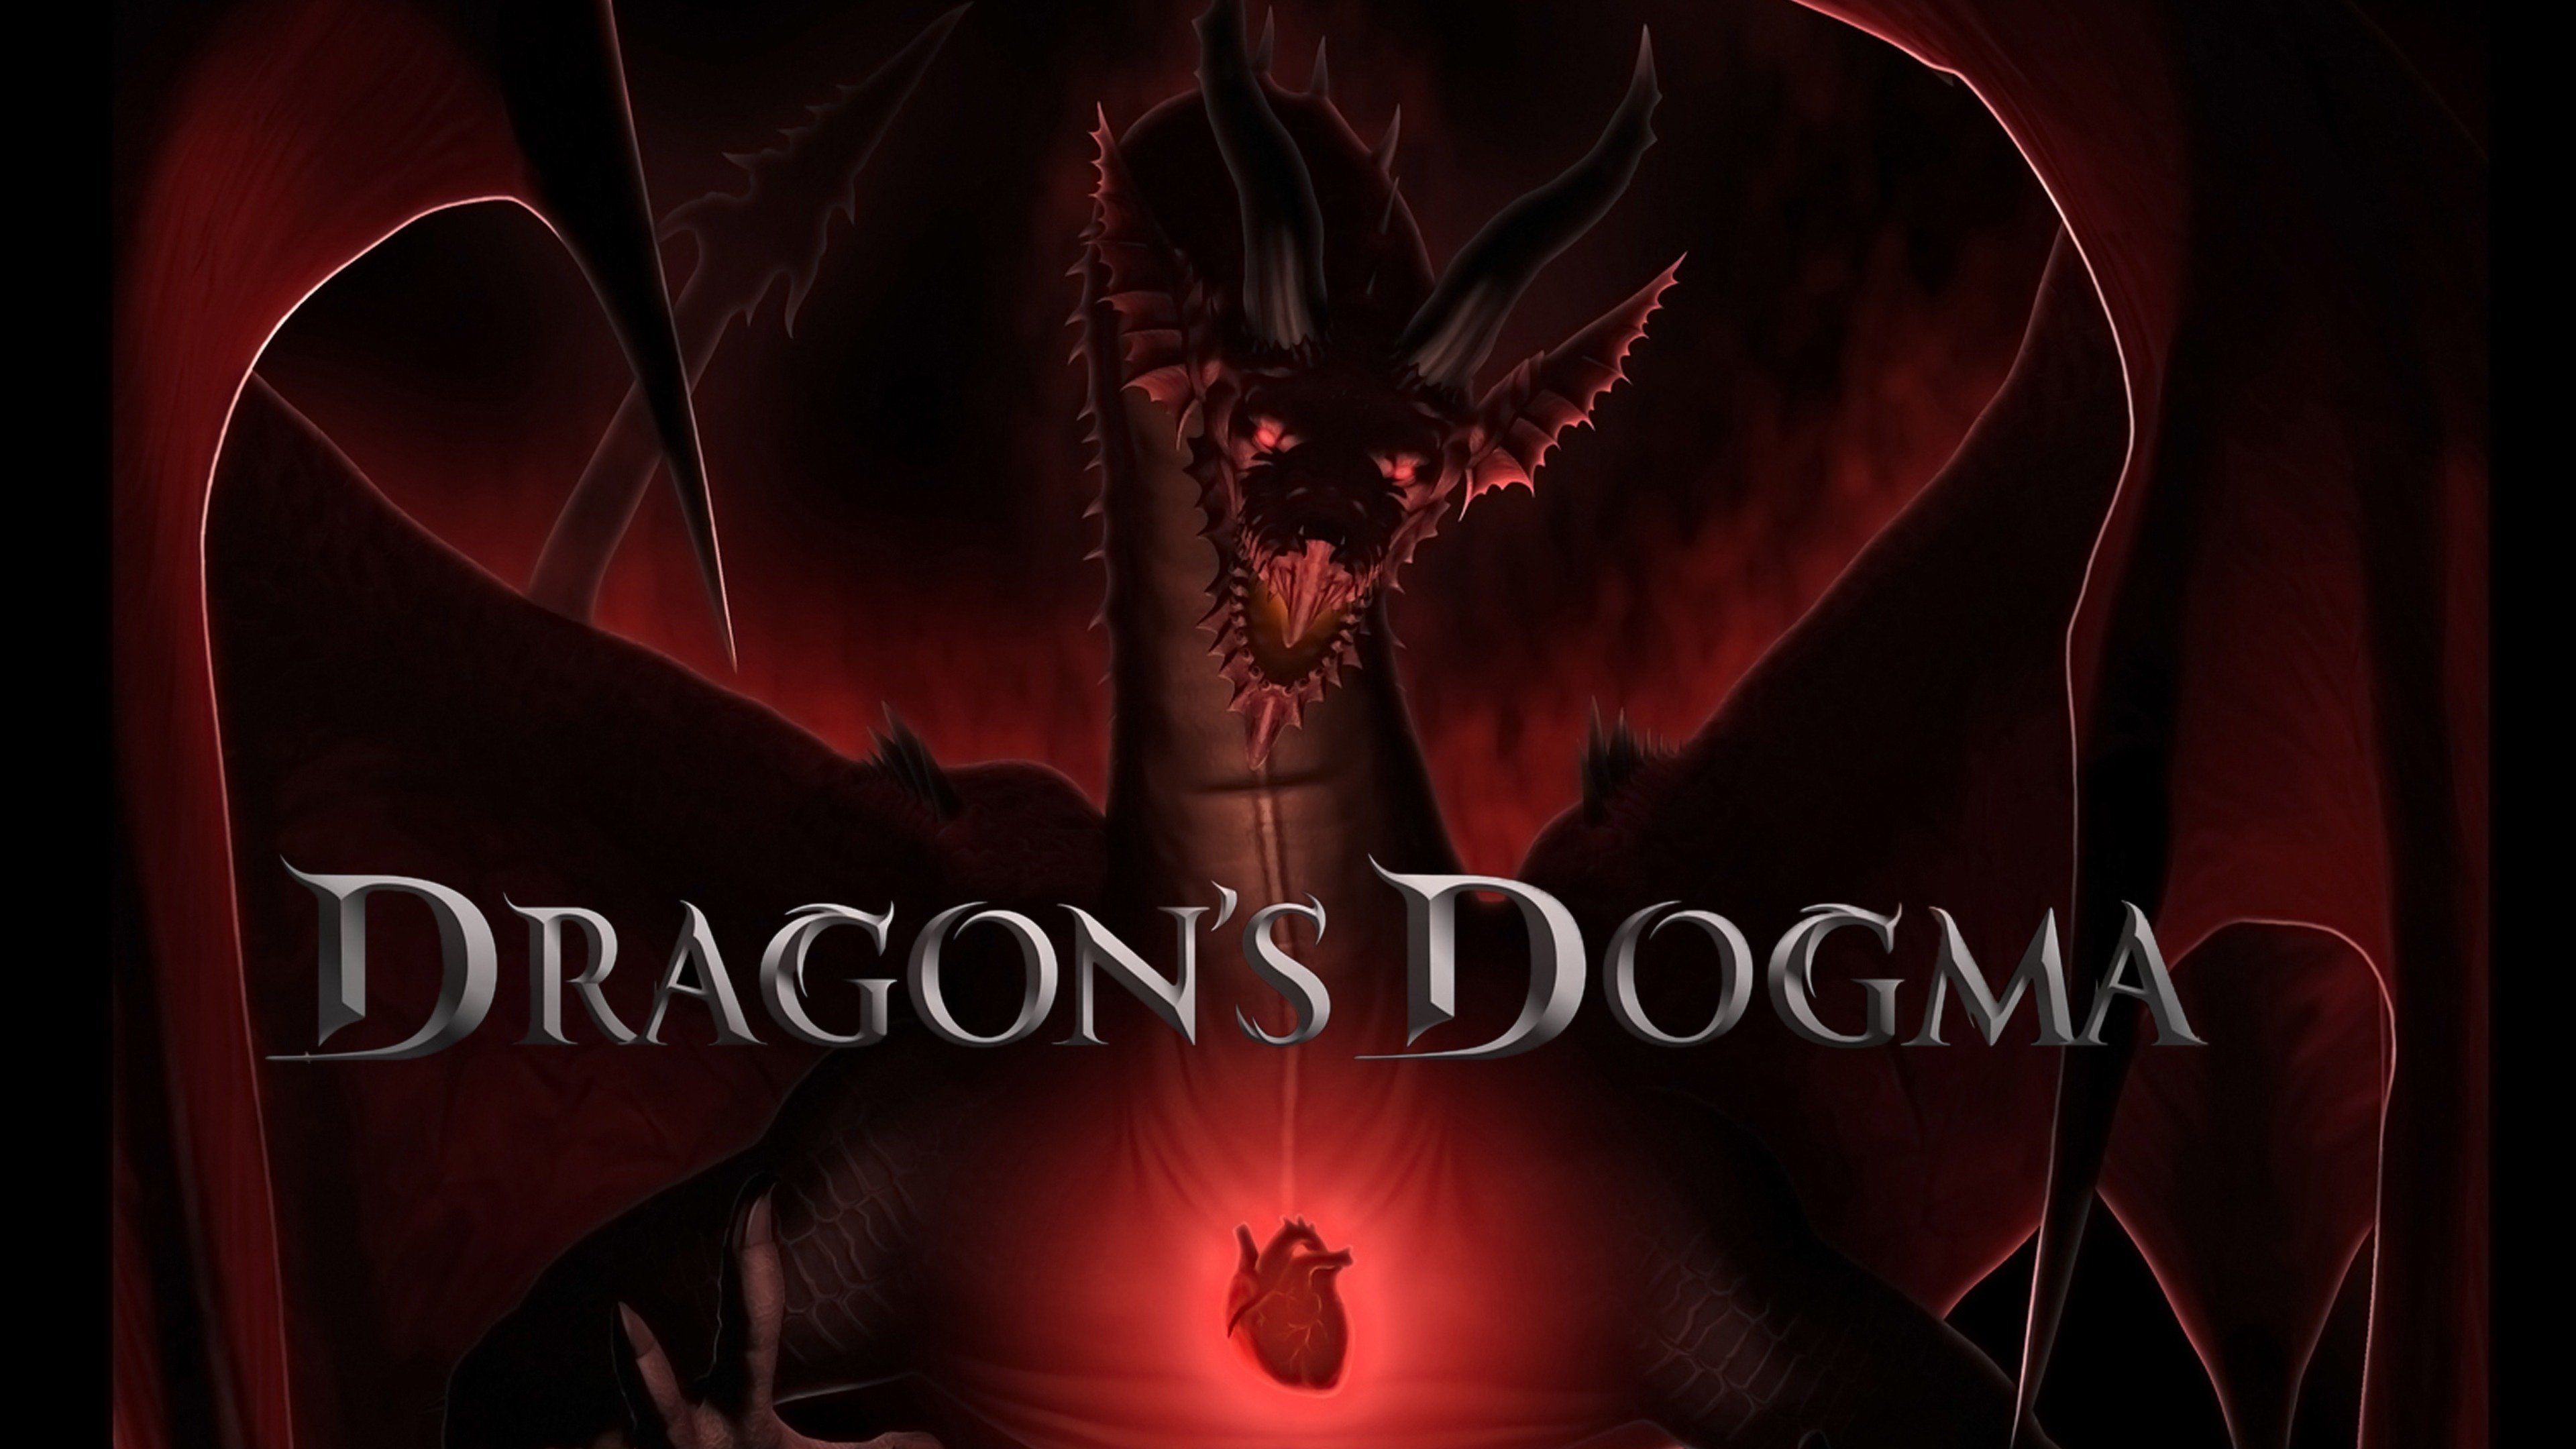 10 Things That Make No Sense About Dragons Dogma On Netflix